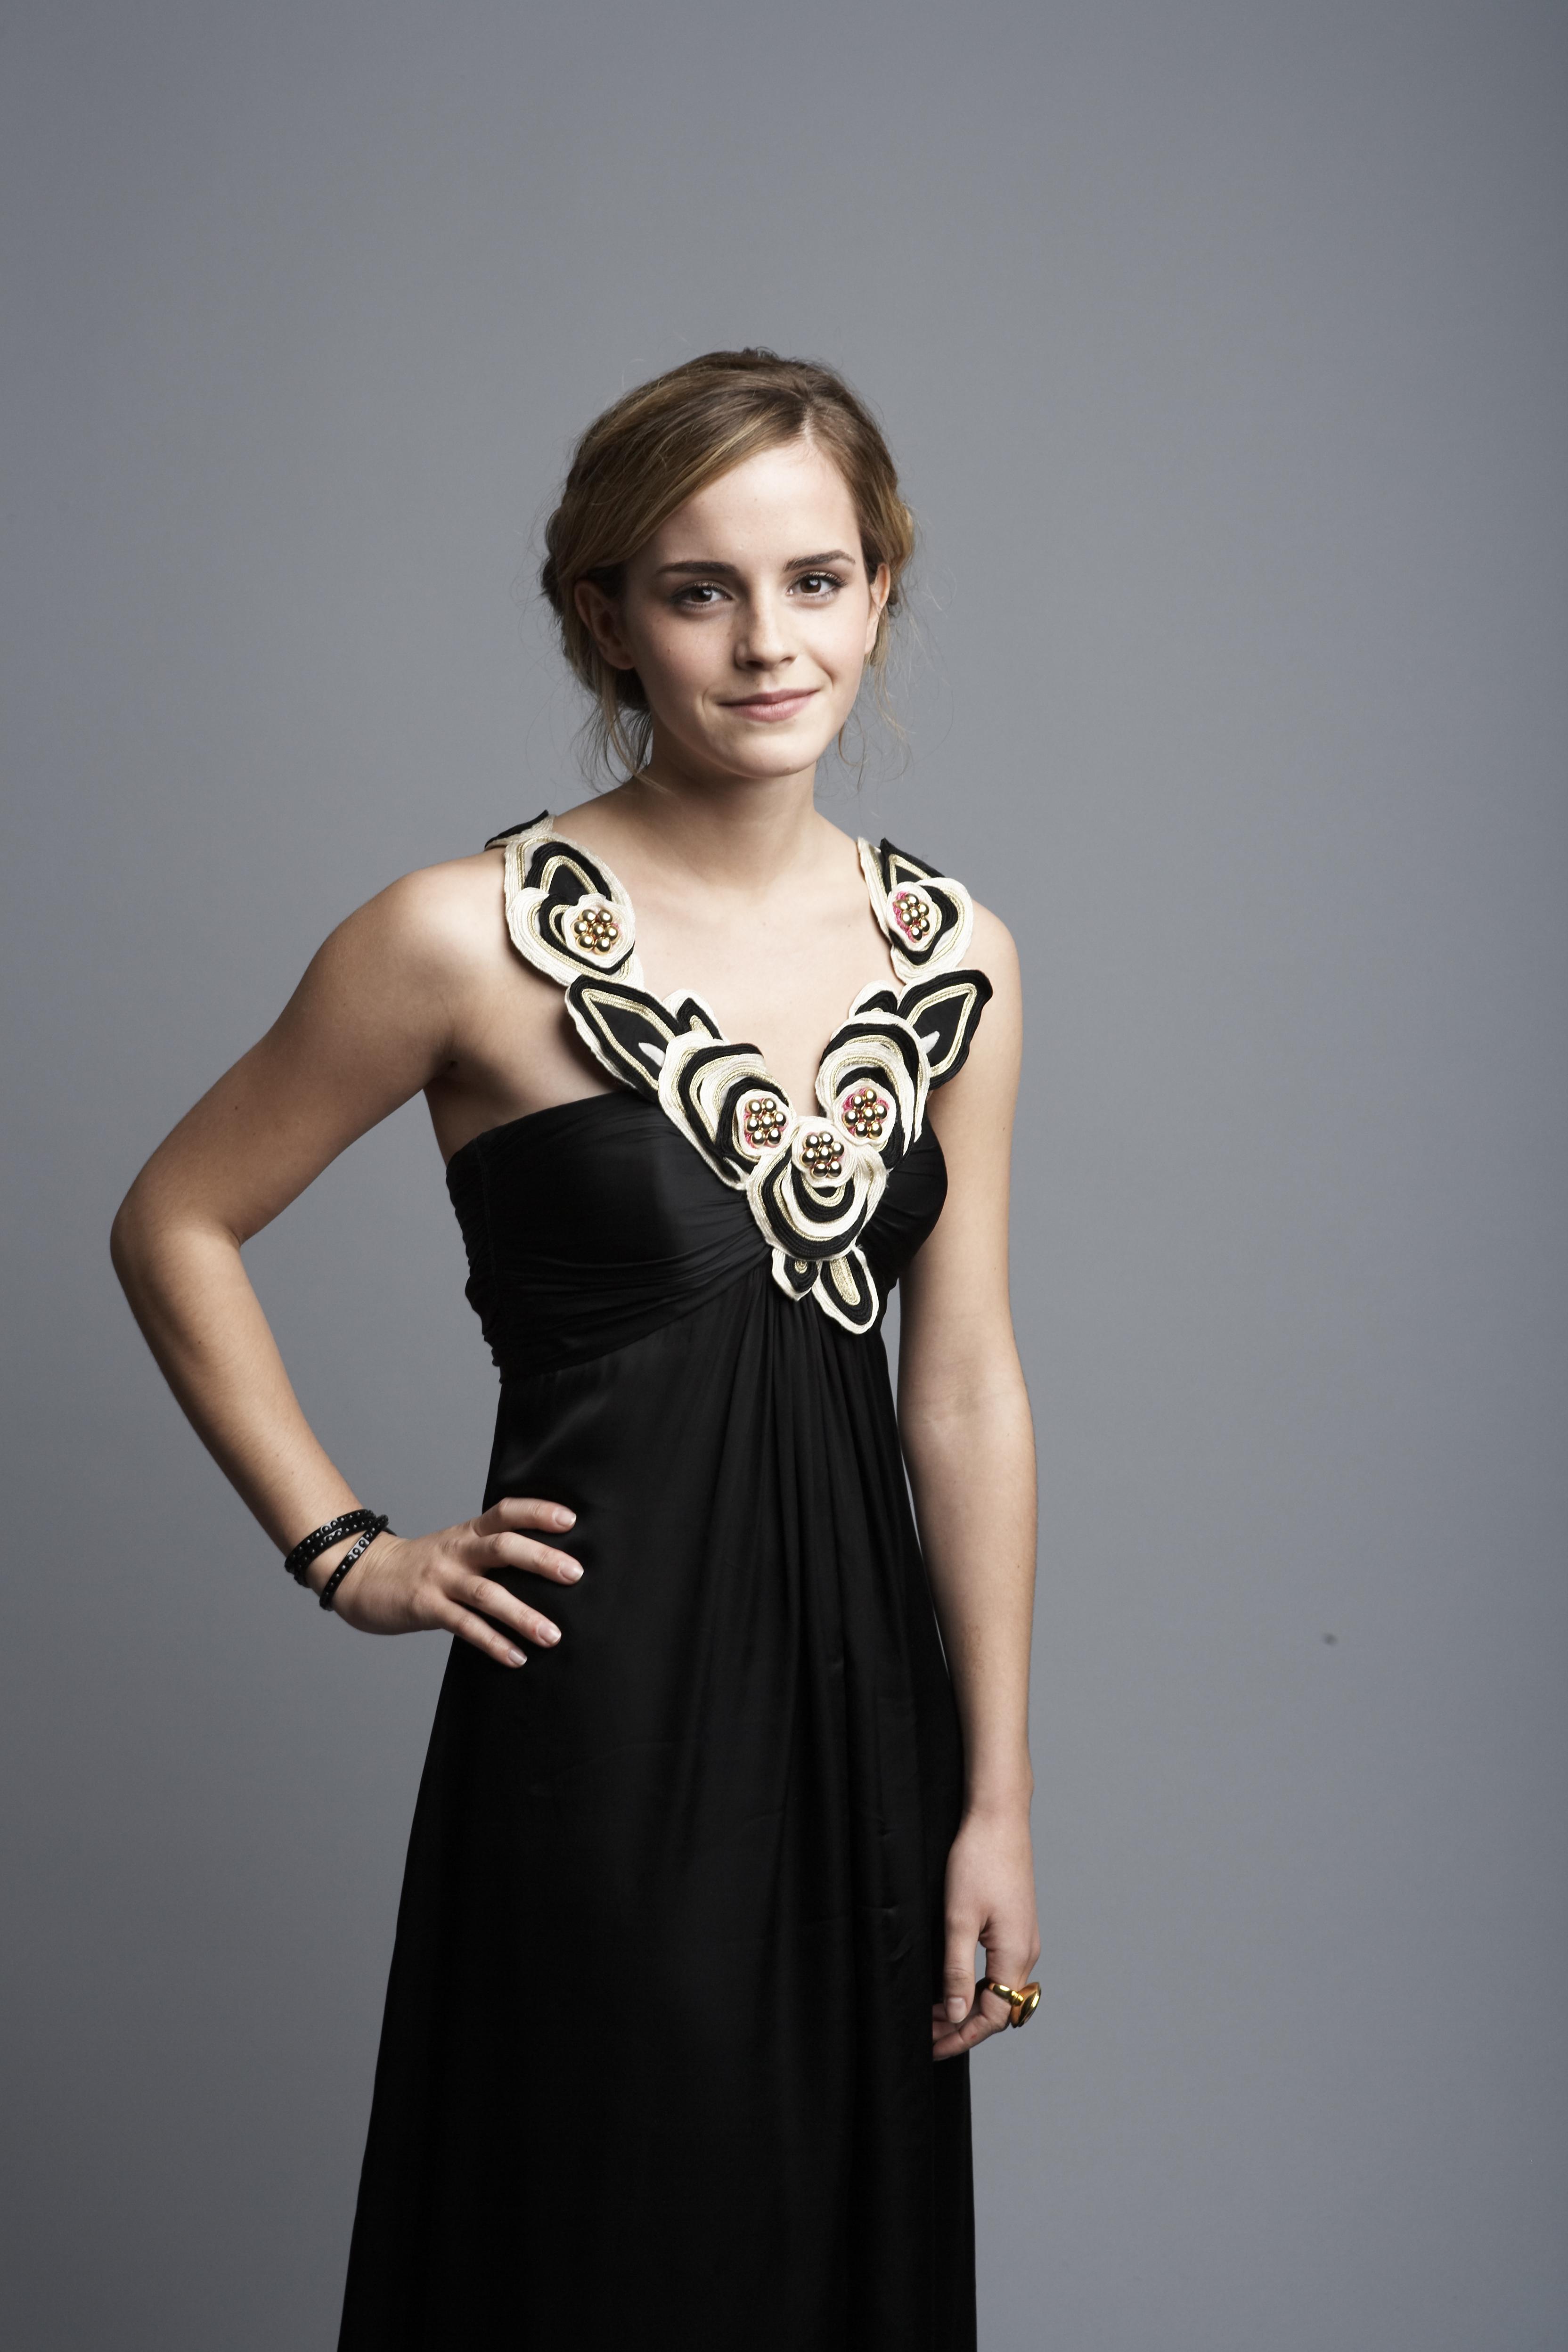 Emma Watson, actress, black dress - desktop wallpaper